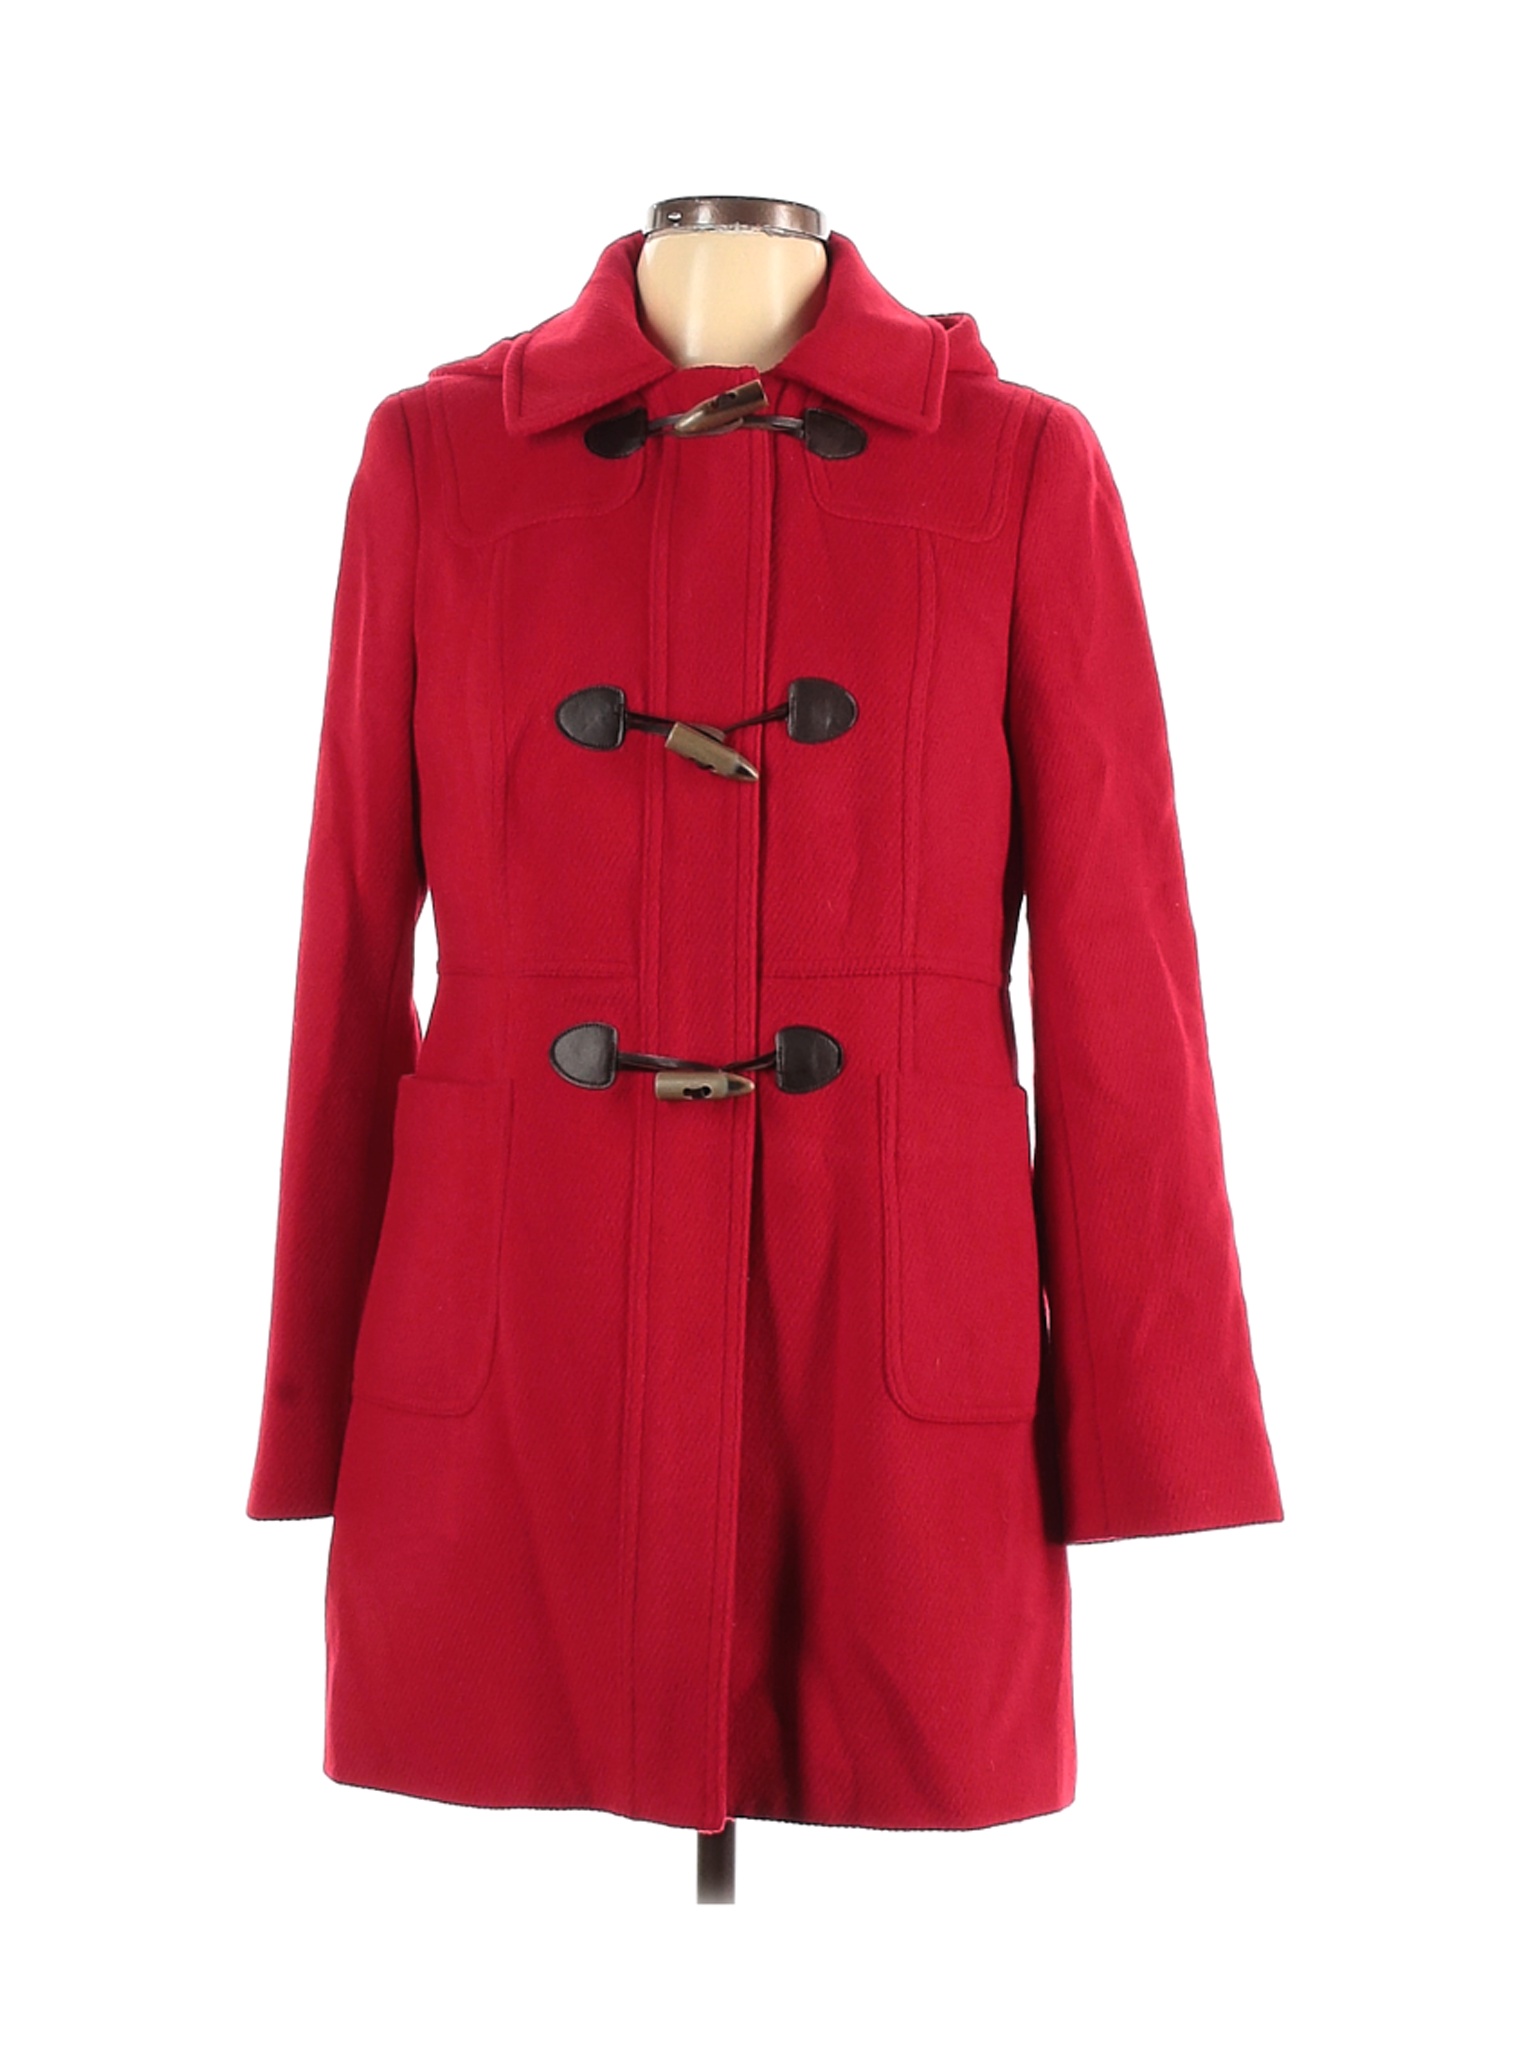 Talbots Women Red Coat 10 Petites | eBay